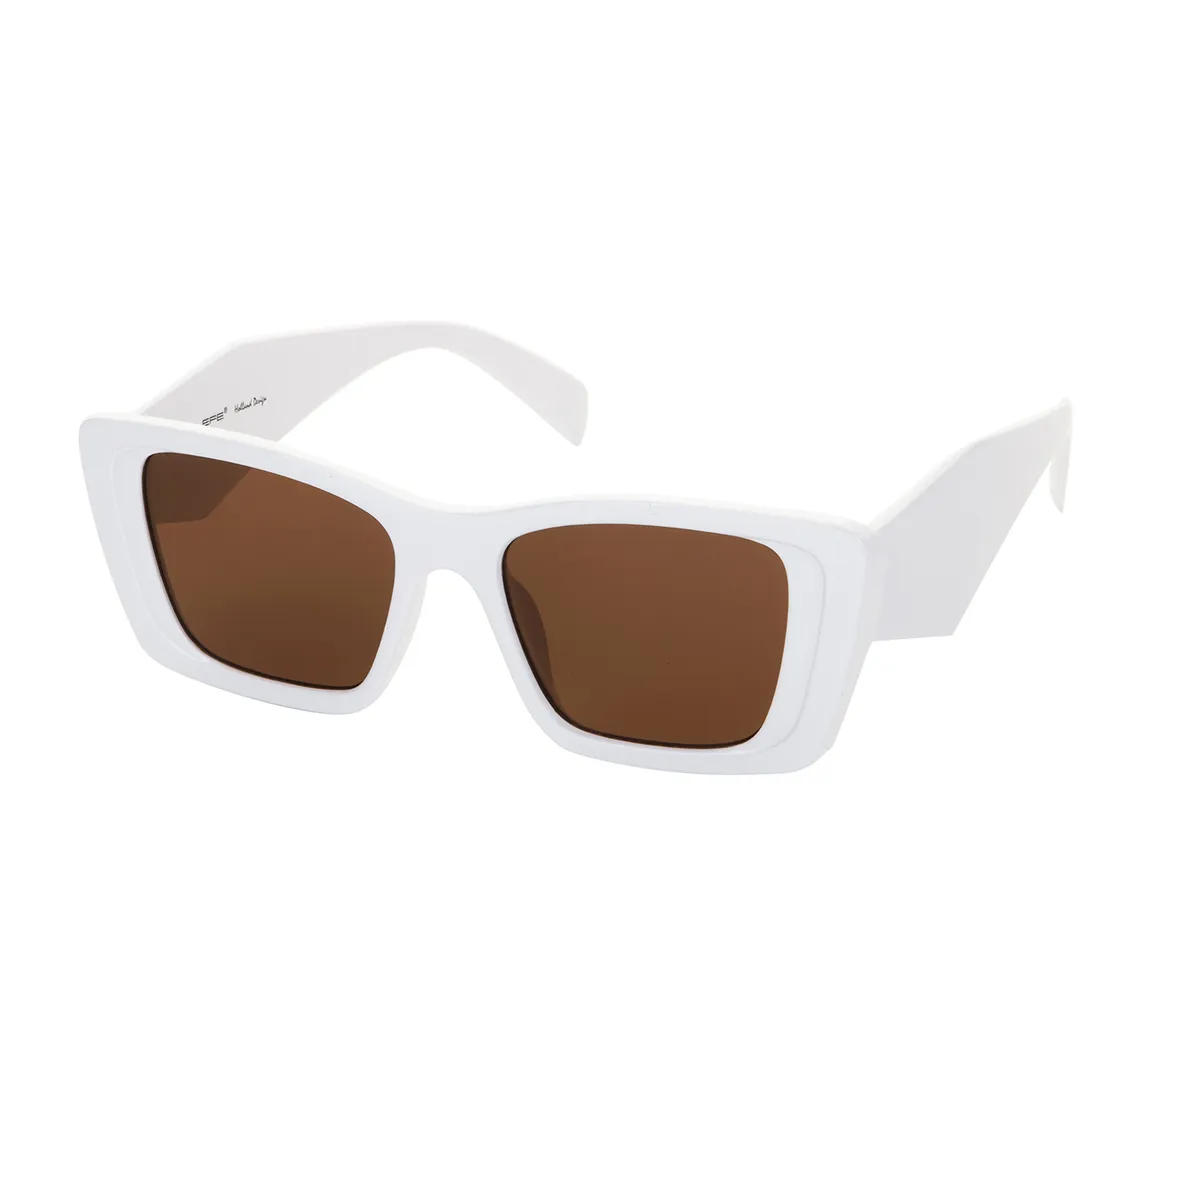 Jam - Square White Sunglasses for Women